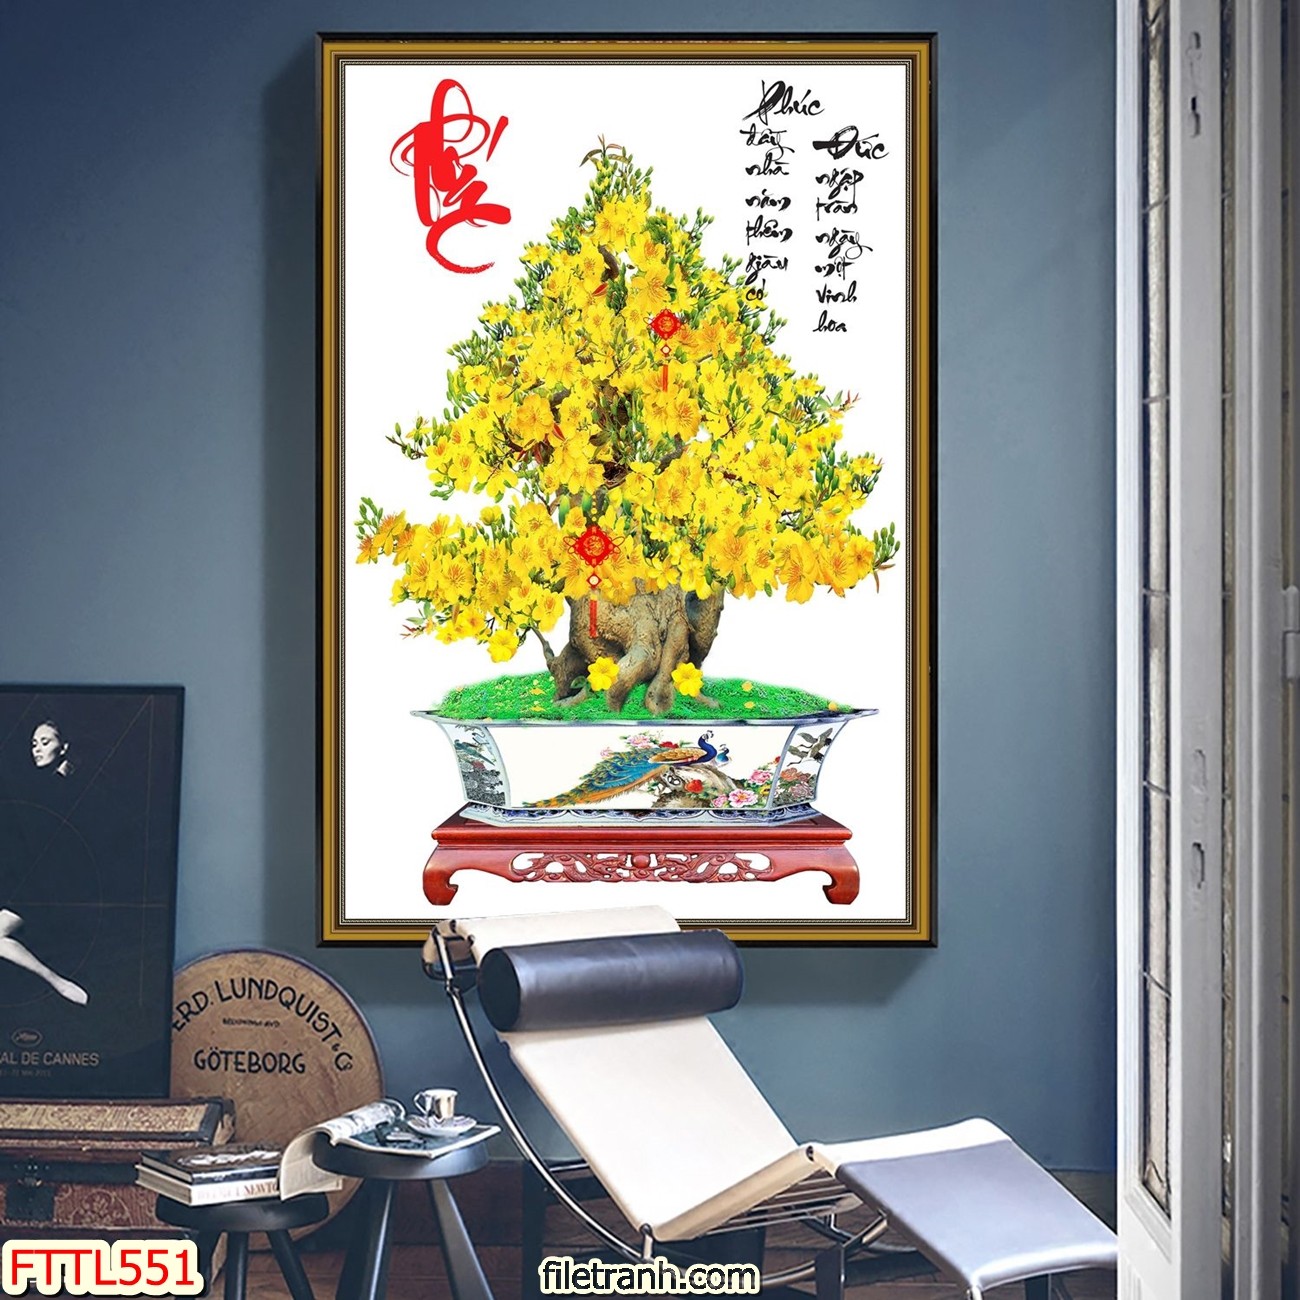 https://filetranh.com/file-tranh-chau-mai-bonsai/file-tranh-chau-mai-bonsai-fttl551.html